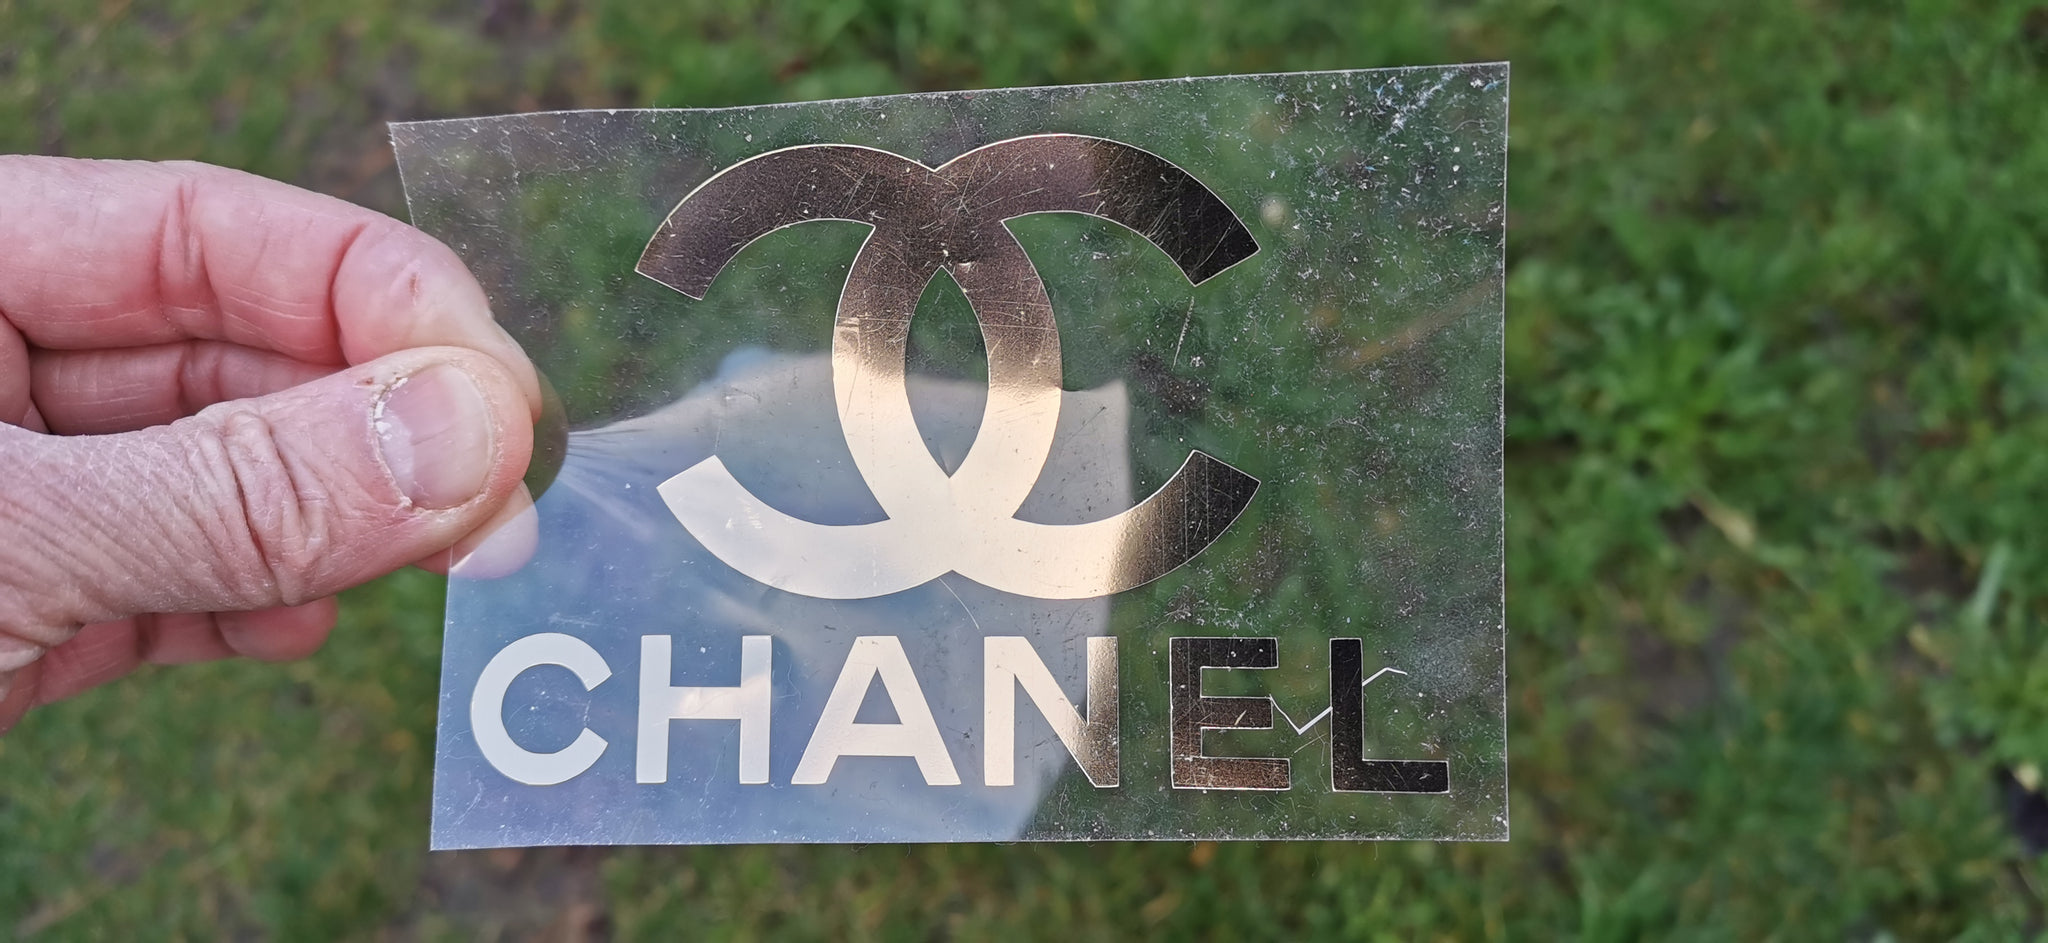 chanel logo sticker